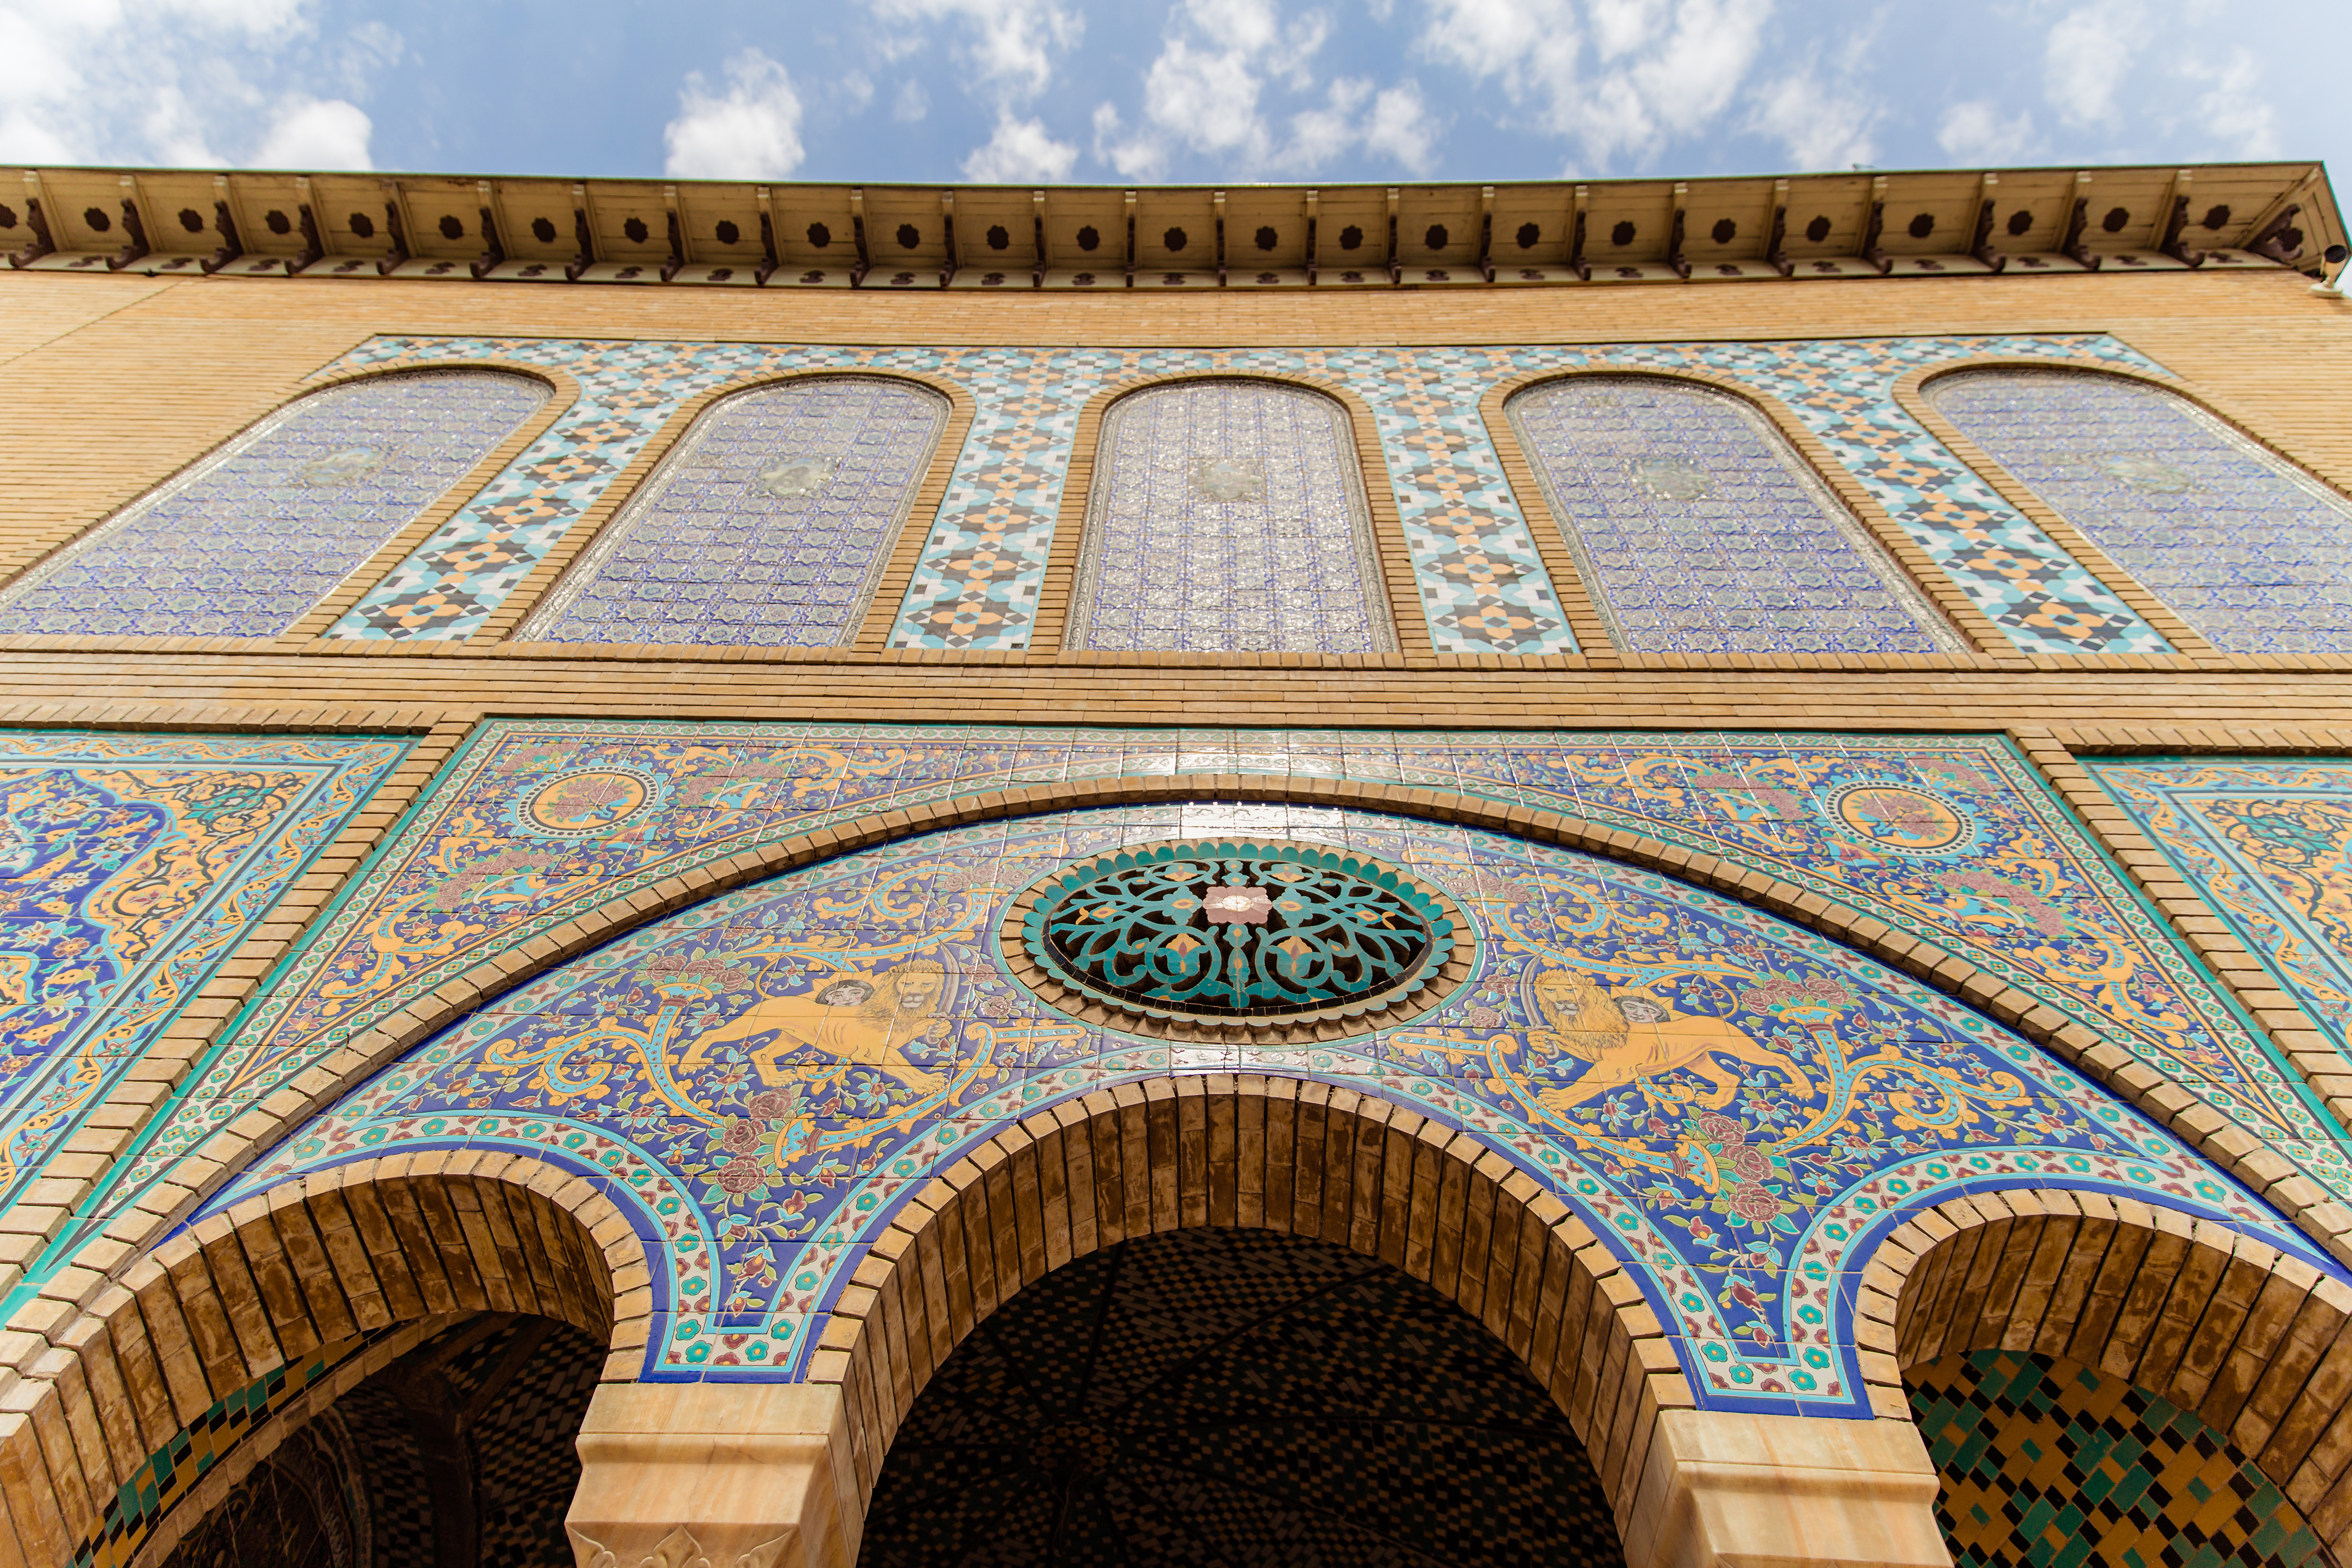 Arches decorated with mosaic tiles, Golestan Palace – © Viktoriia Vyshnevetska / Shutterstock